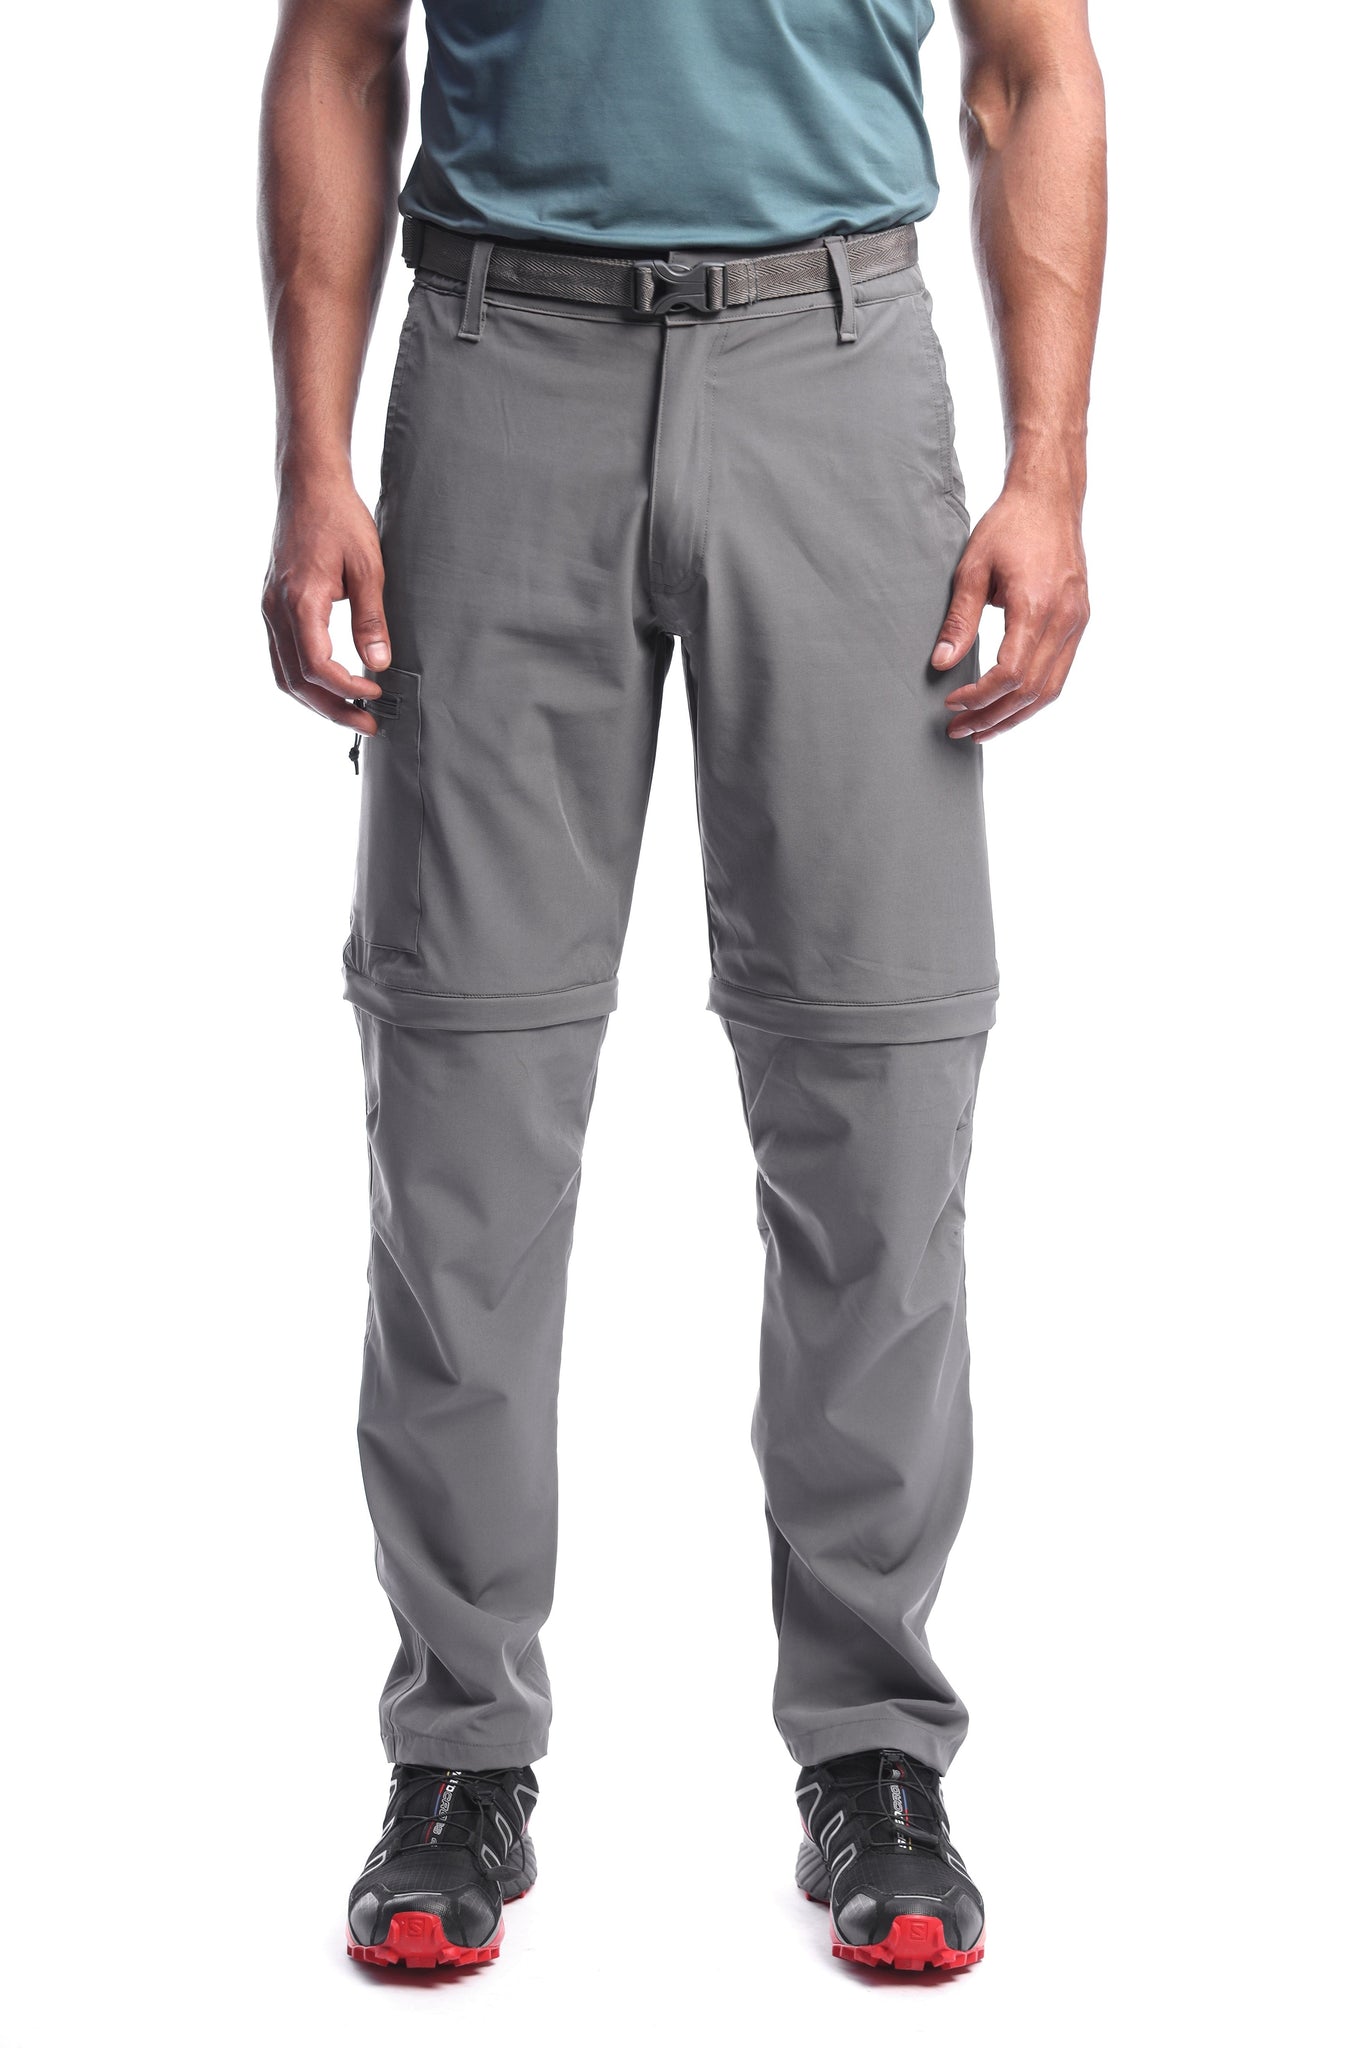 Buy TREKMONK Men's Loose Convertible Cargo Pants Olive S at Amazon.in